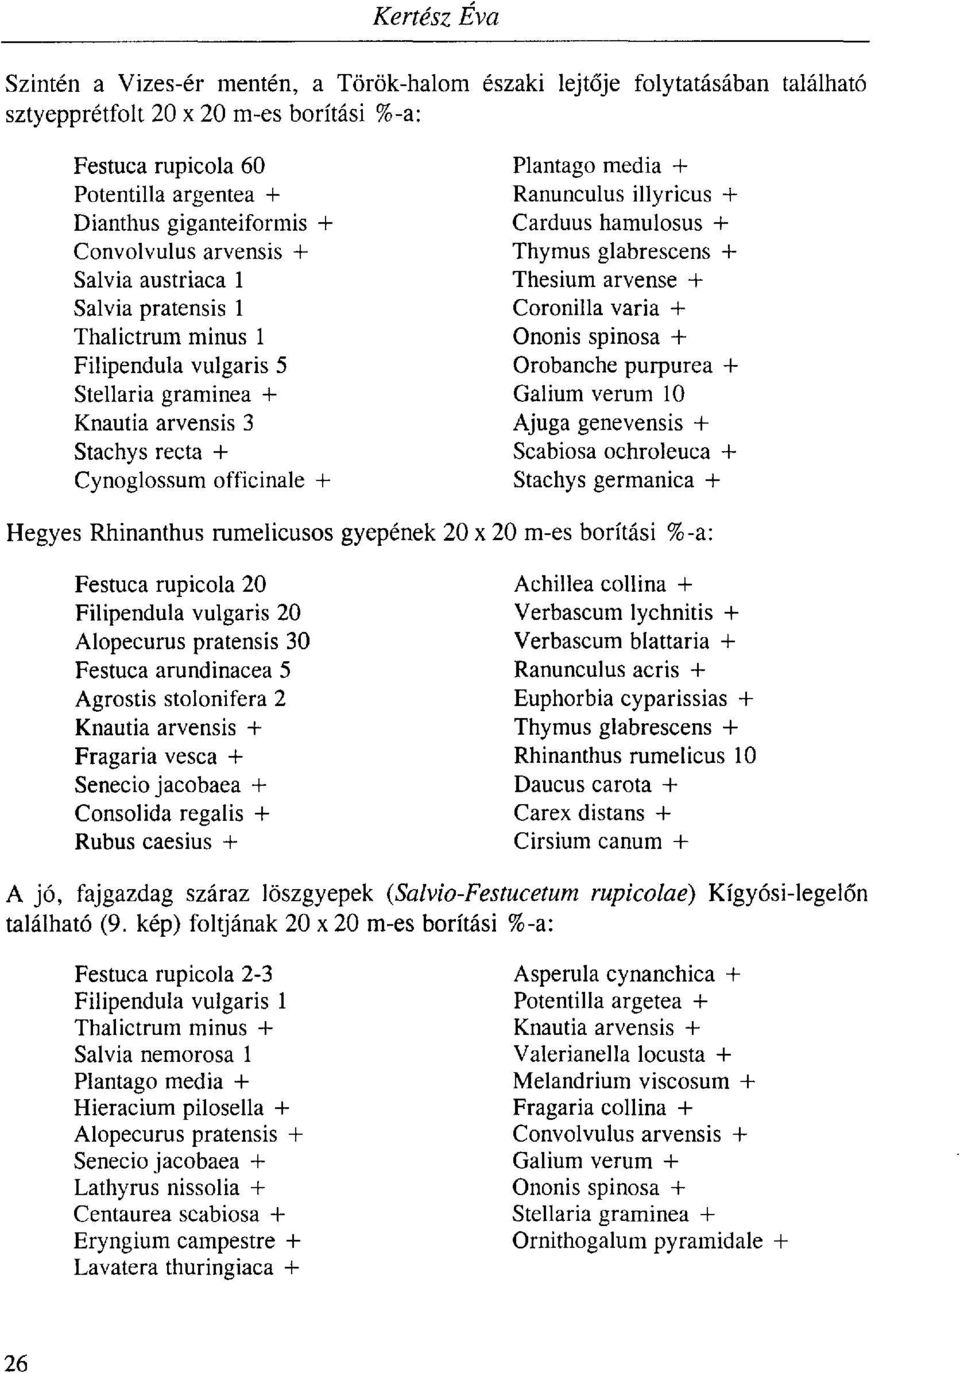 minus 1 Ononis spinosa + Filipendula vulgaris 5 Orobanche purpurea + Stellaria graminea + Galium verum 10 Knautia arvensis 3 Ajuga genevensis + Stachys recta + Scabiosa ochroleuca + Cynoglossum